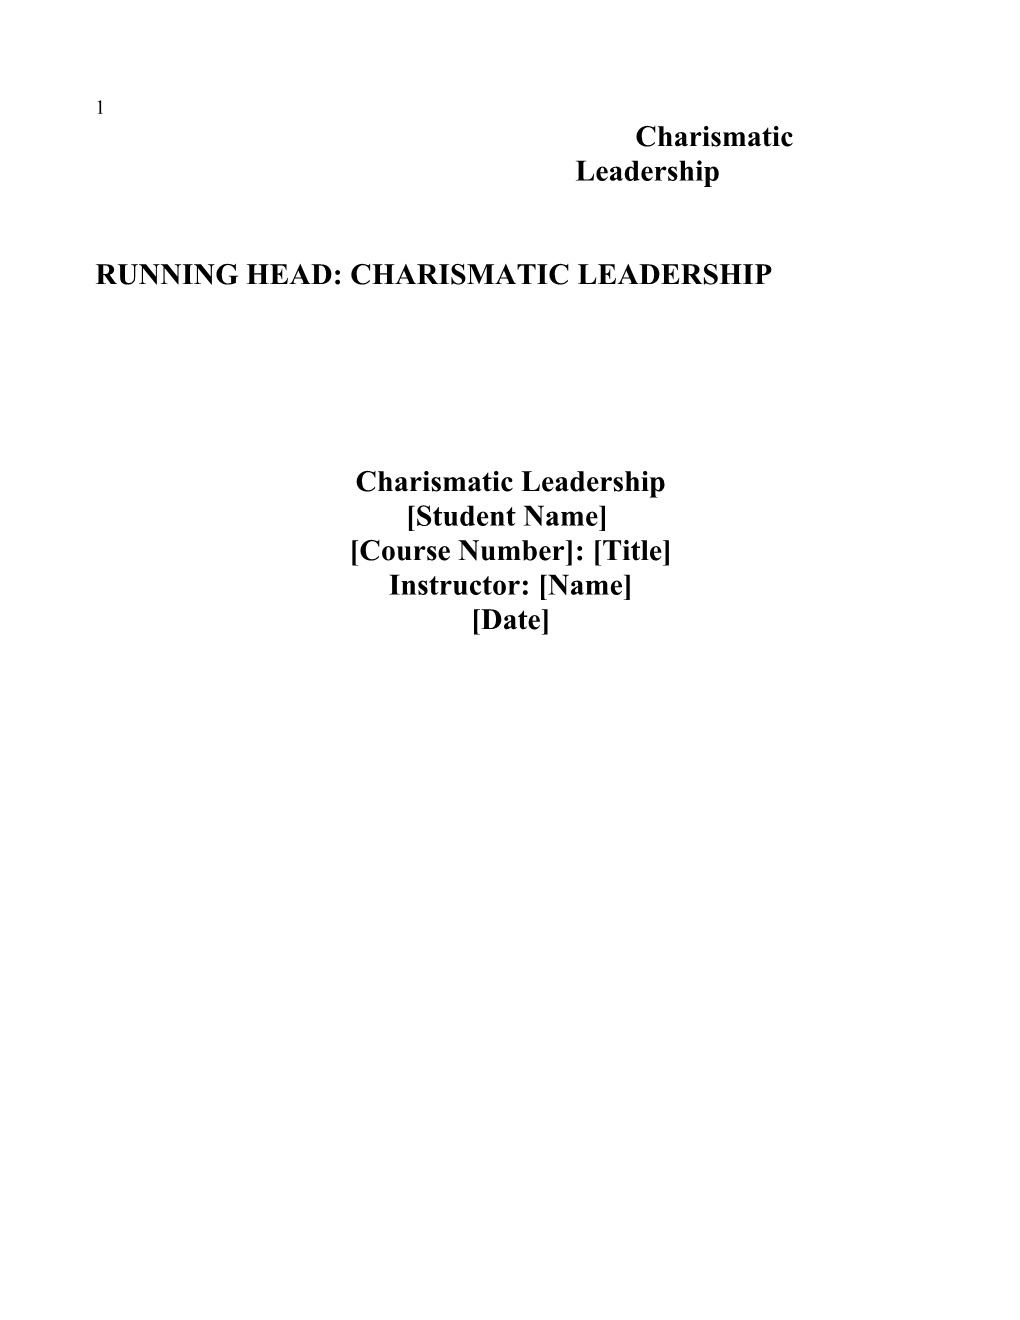 Running Head: Charismatic Leadership